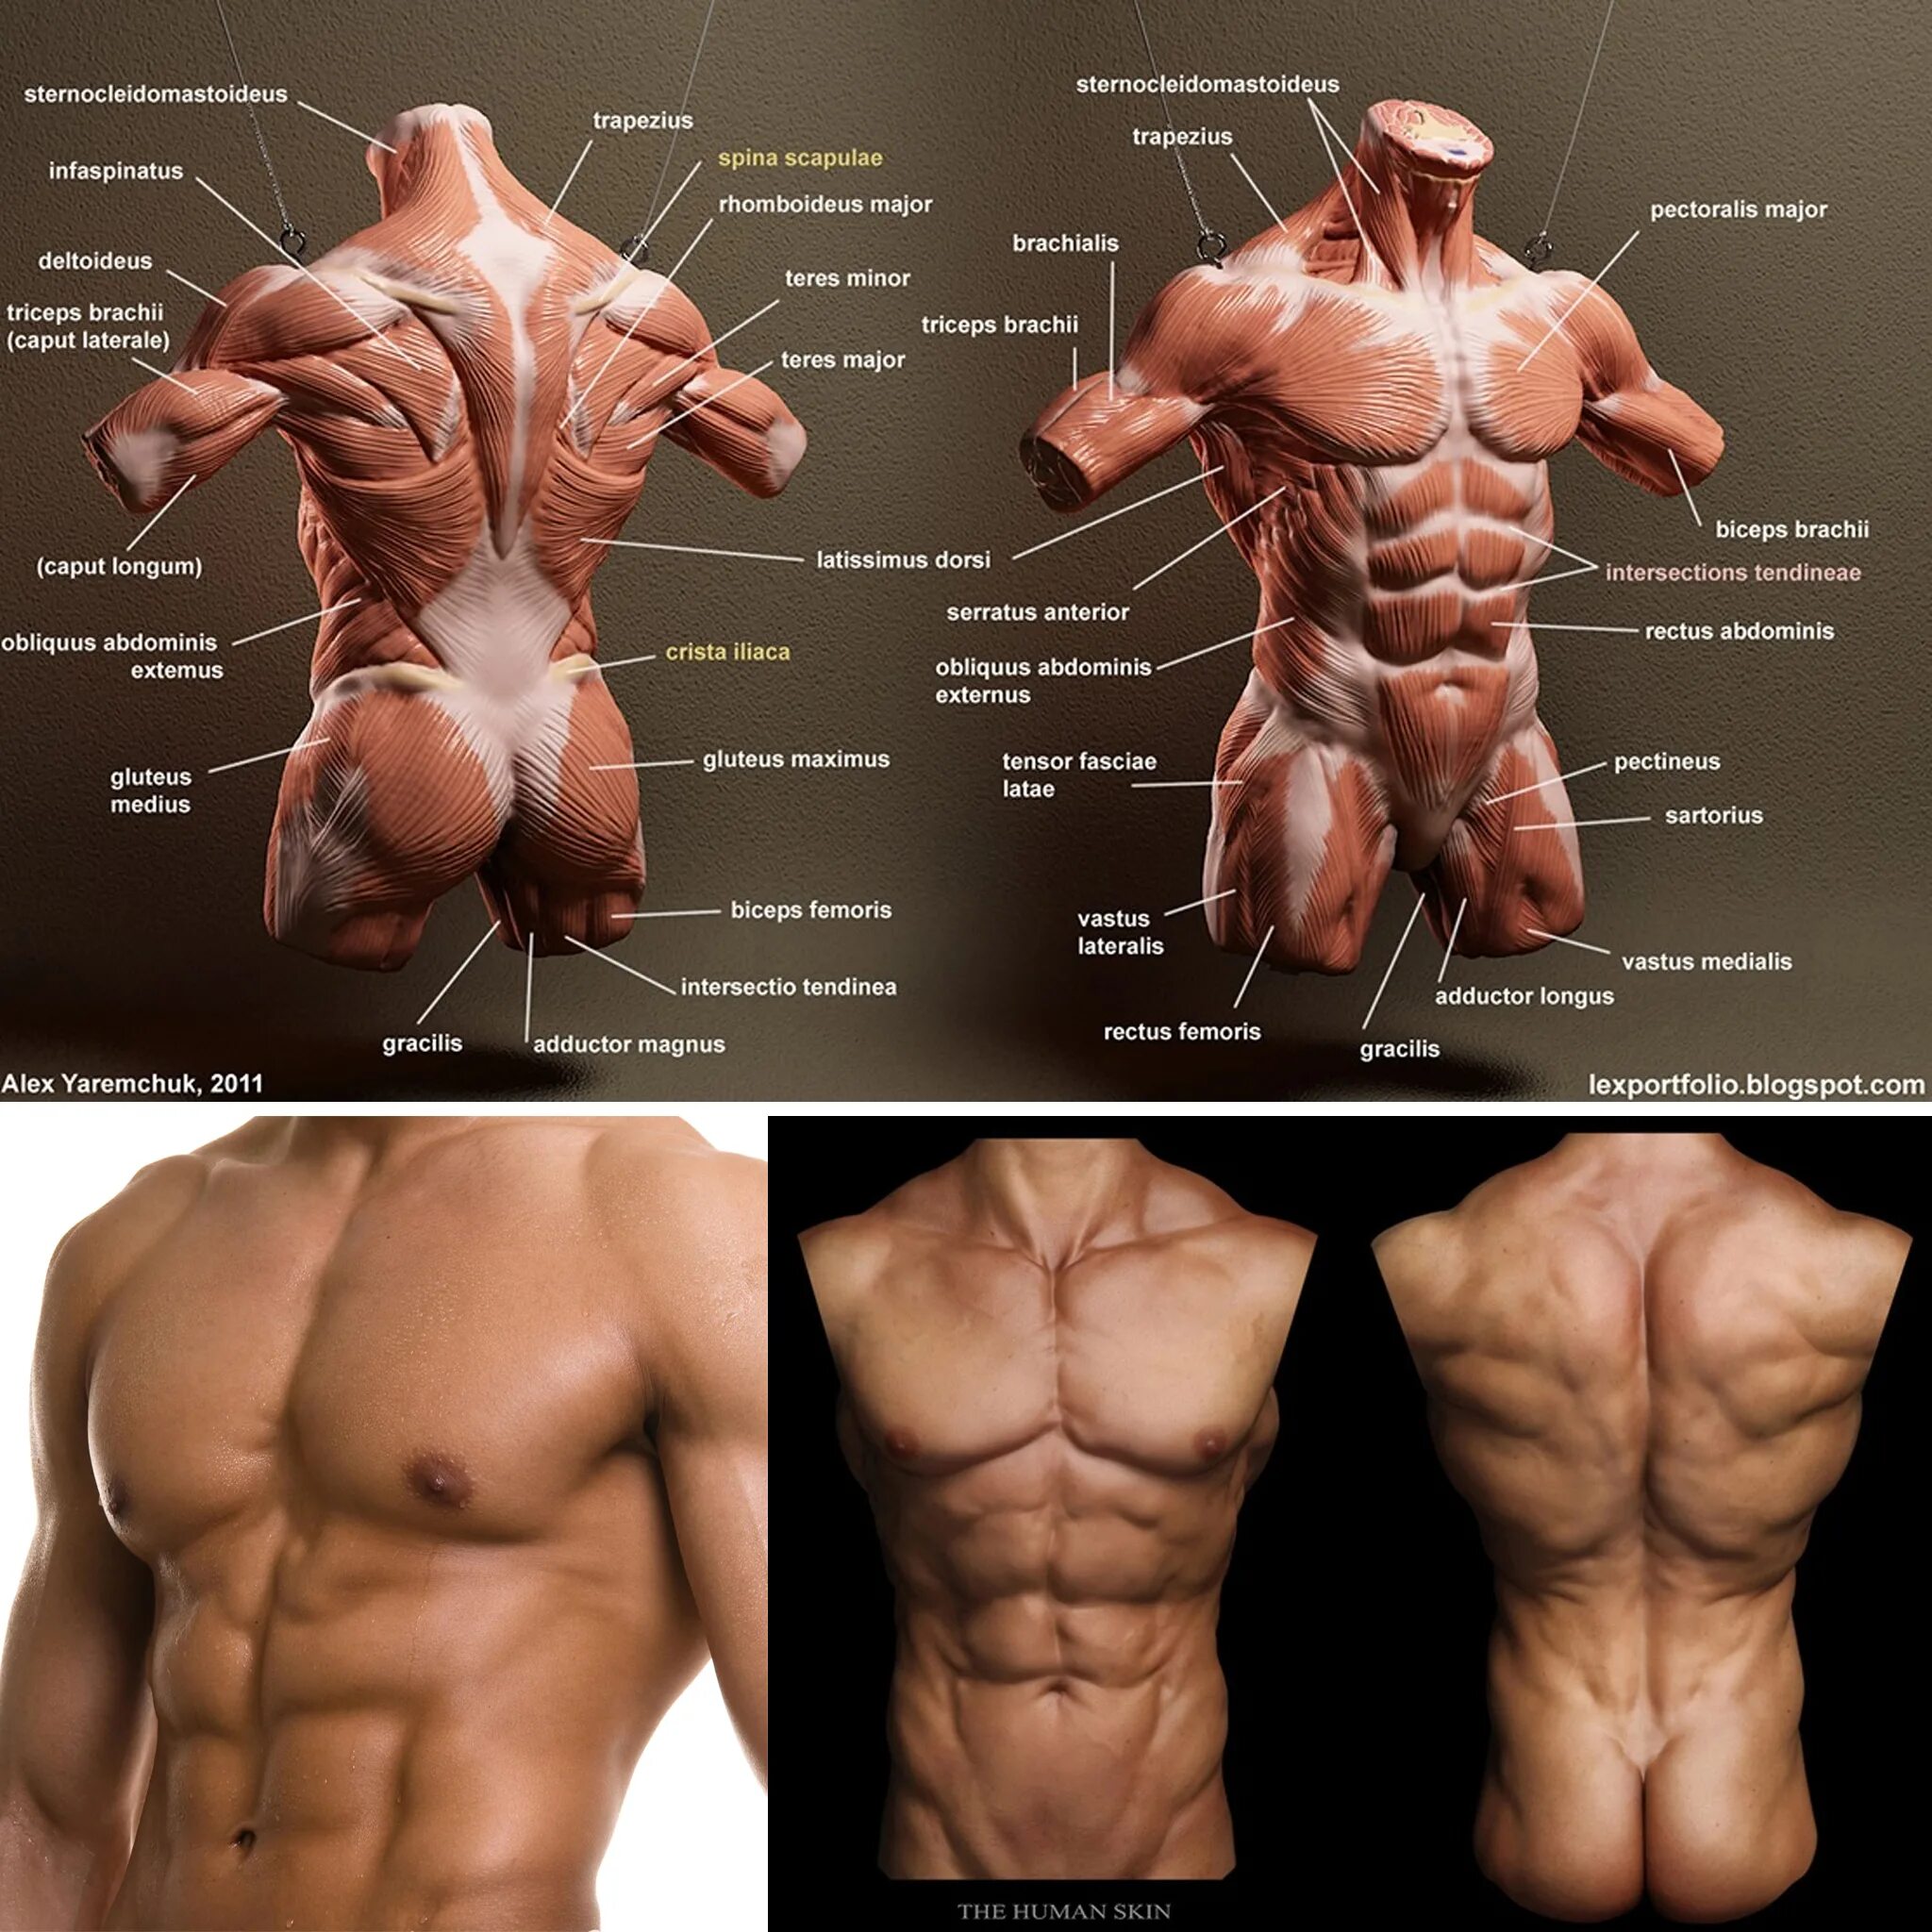 Анатомия референс мышцы. Мышцы торса человека анатомия. Мышцы торса референс. Строение мышц торса мужчины. Мужская часть мужчины